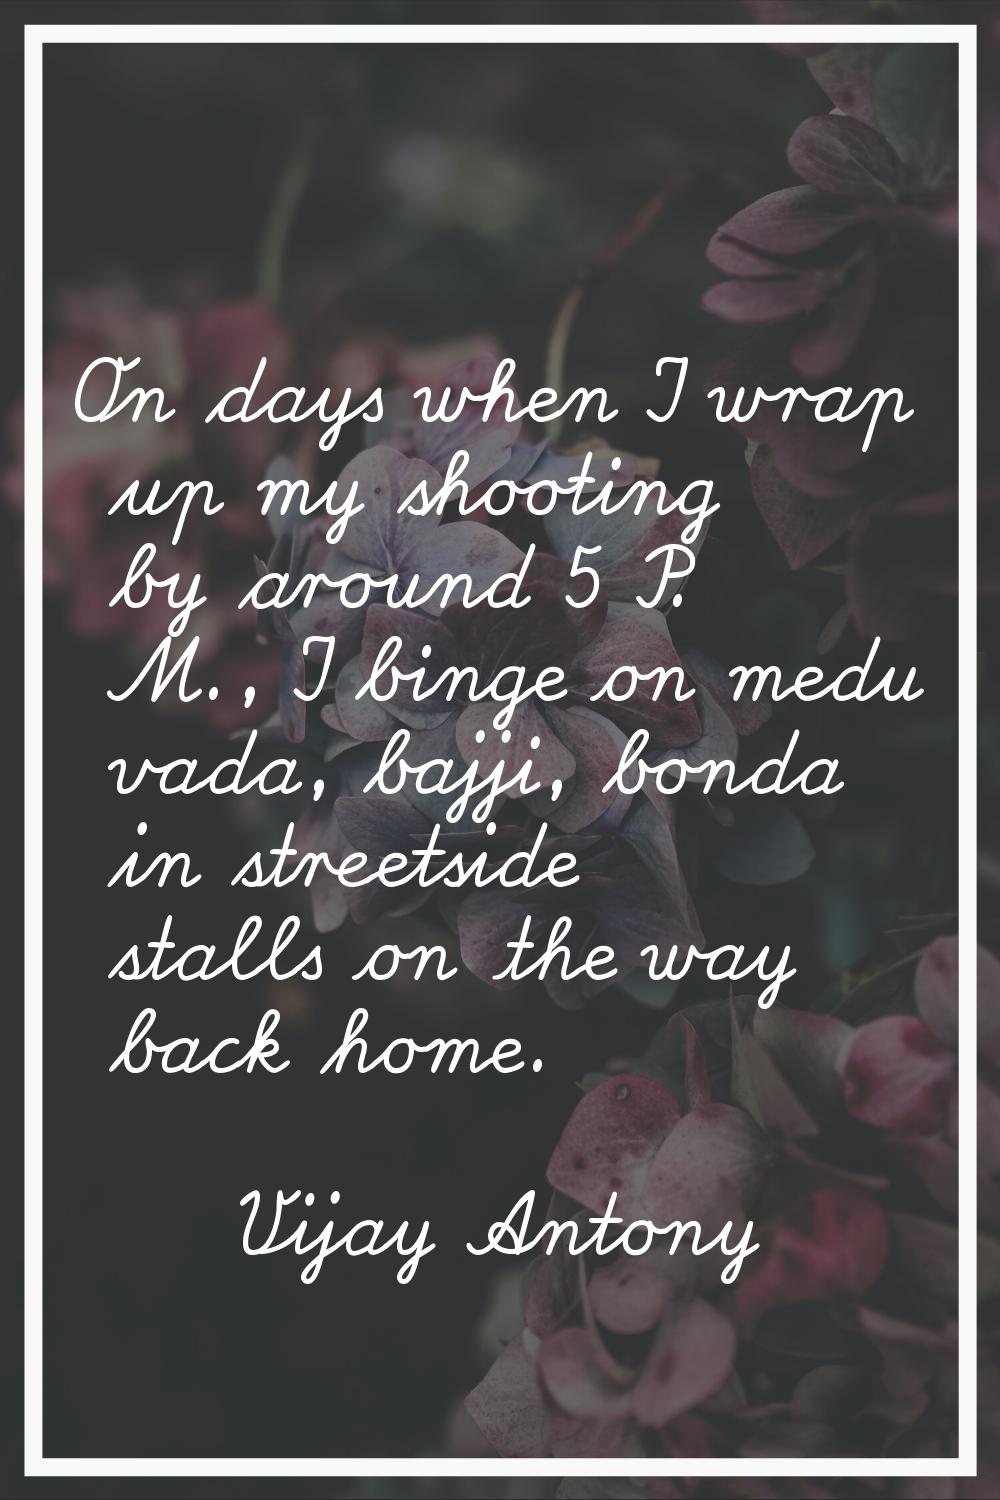 On days when I wrap up my shooting by around 5 P. M., I binge on medu vada, bajji, bonda in streets